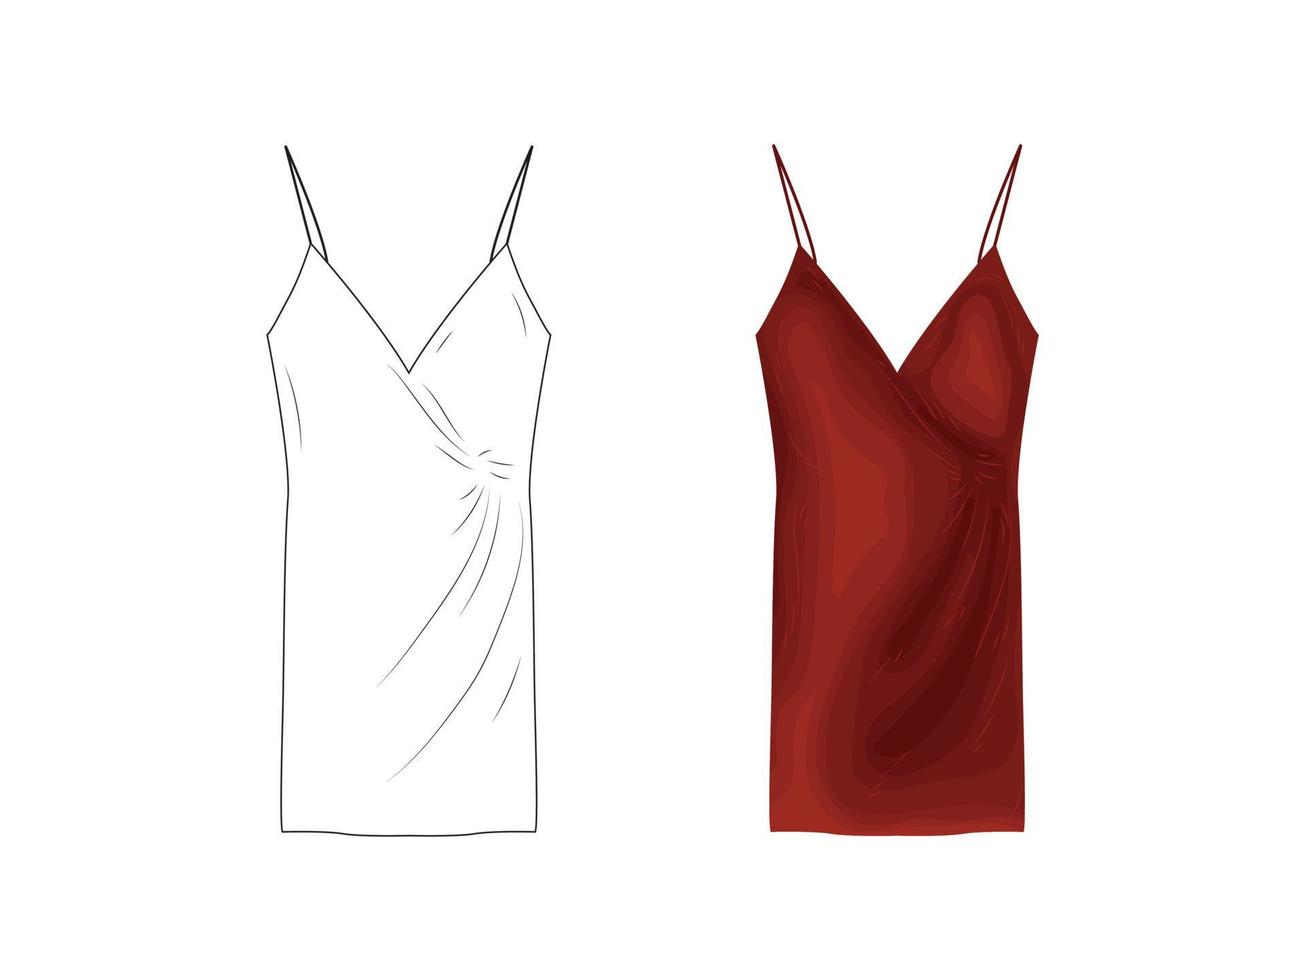 mode product catalogus uniformen mockup schets vector illustratie kleding silhouet pictogram model up